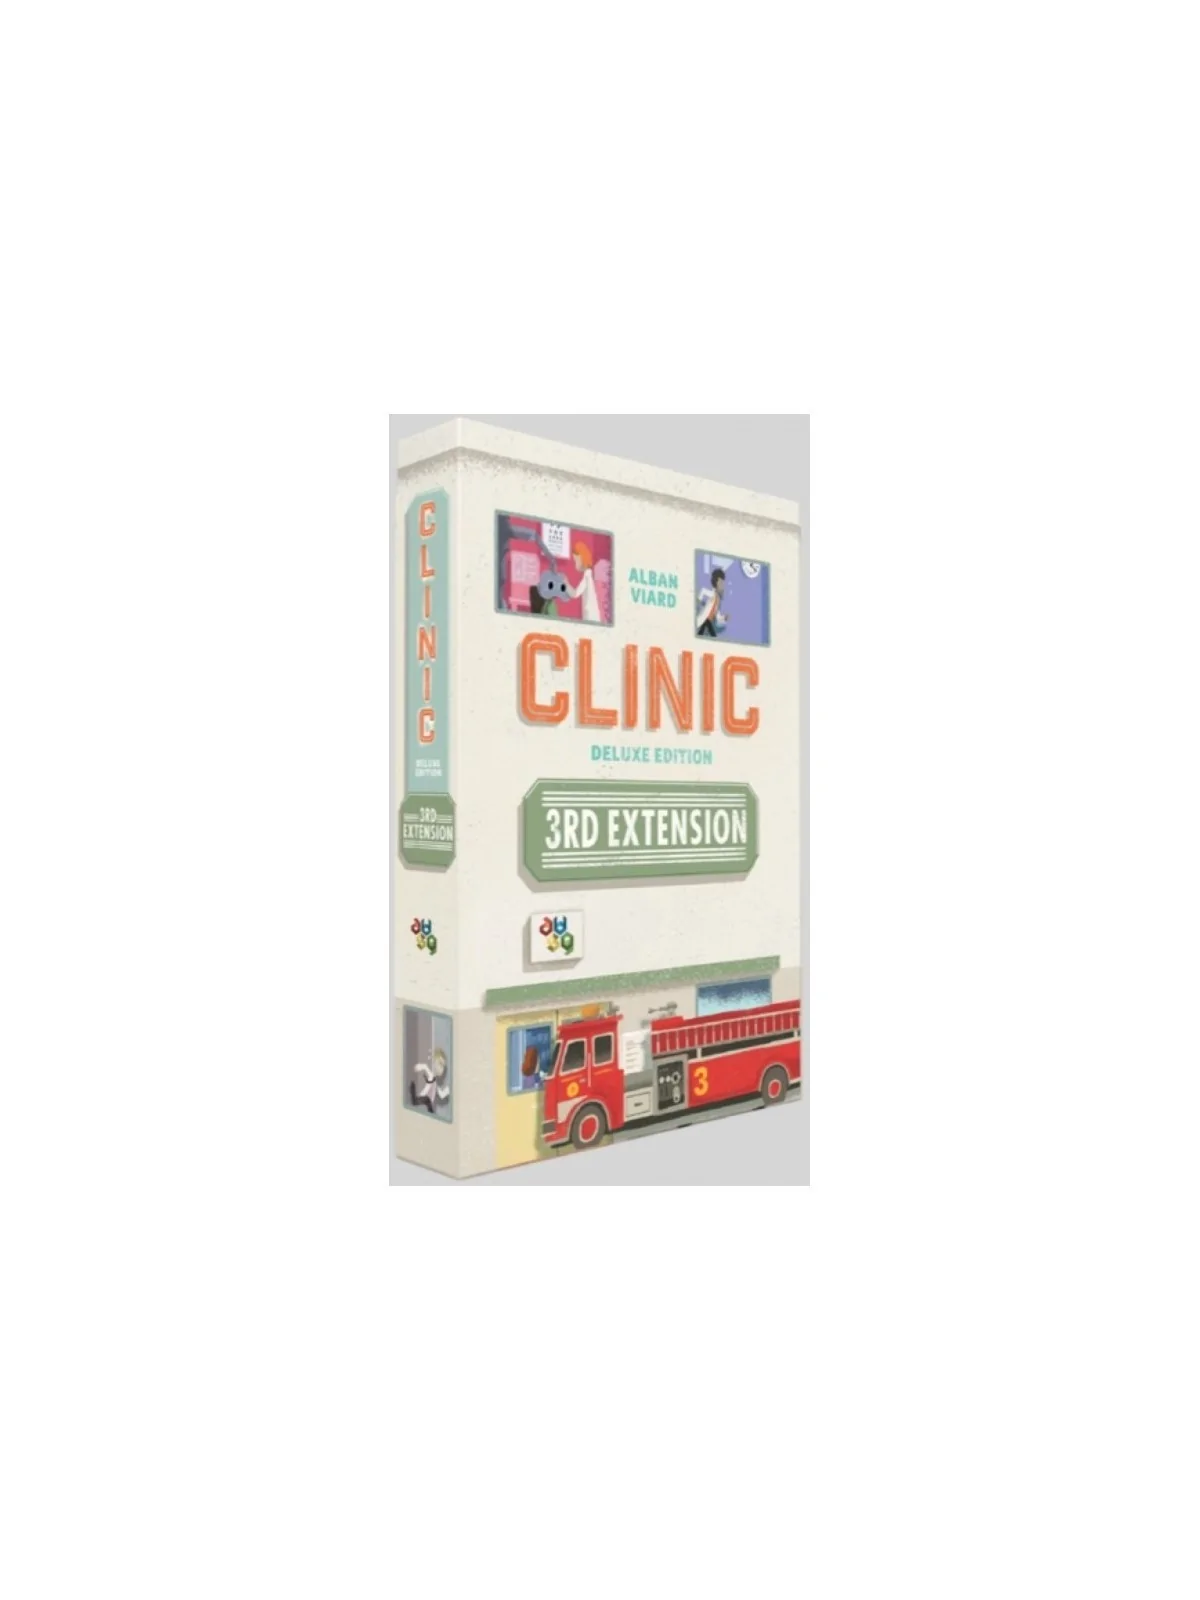 Comprar Clinic: Deluxe Edition – The Extension 3 (Inglés) barato al me